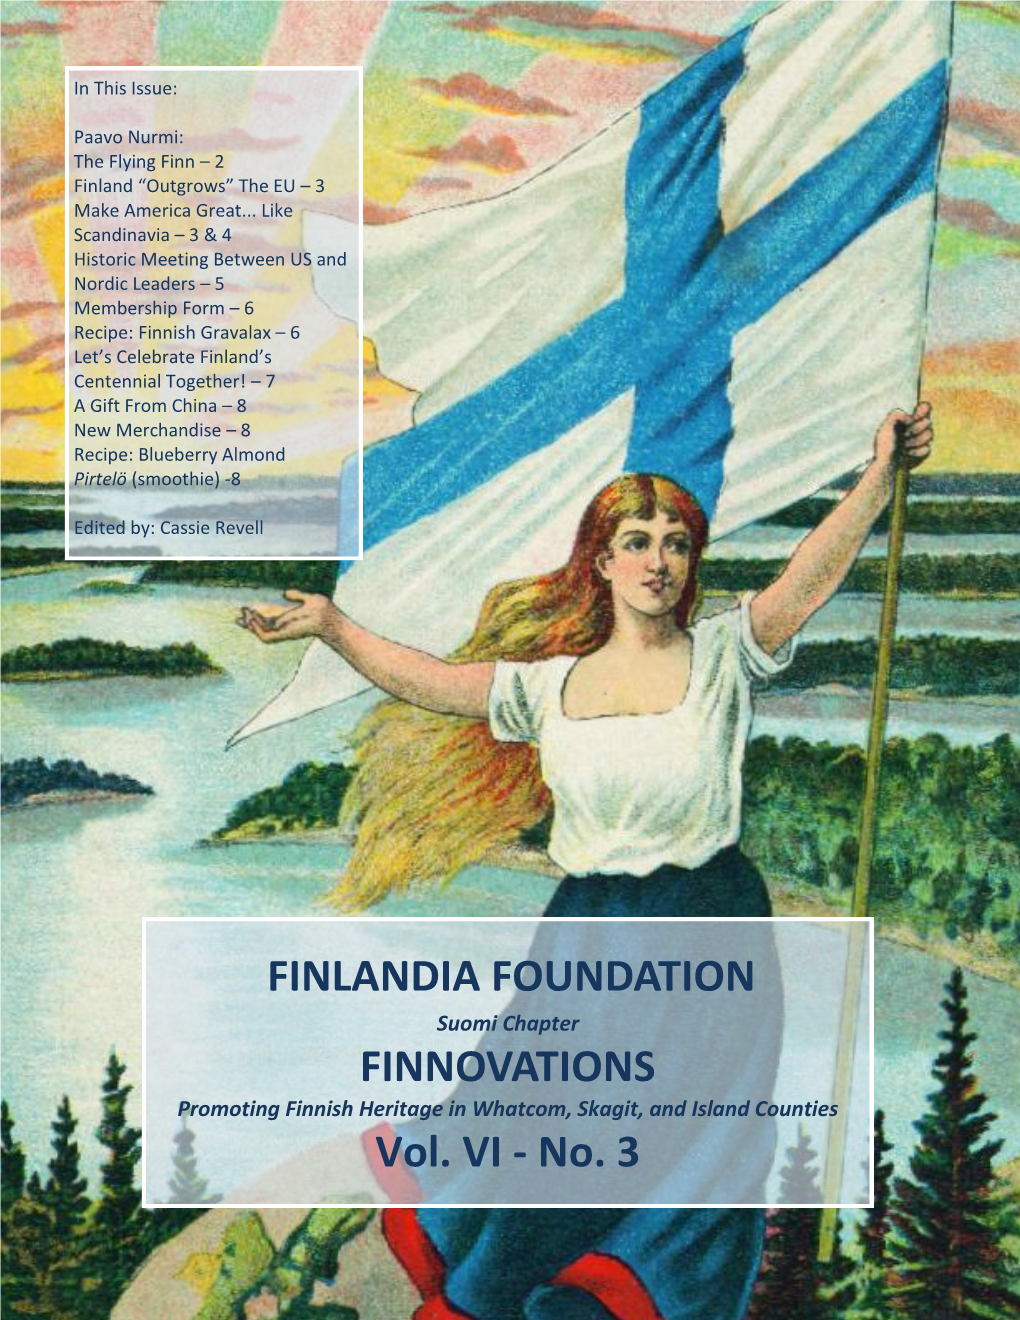 Paavo Nurmi: the Flying Finn – 2 Finland “Outgrows” the EU – 3 Make America Great